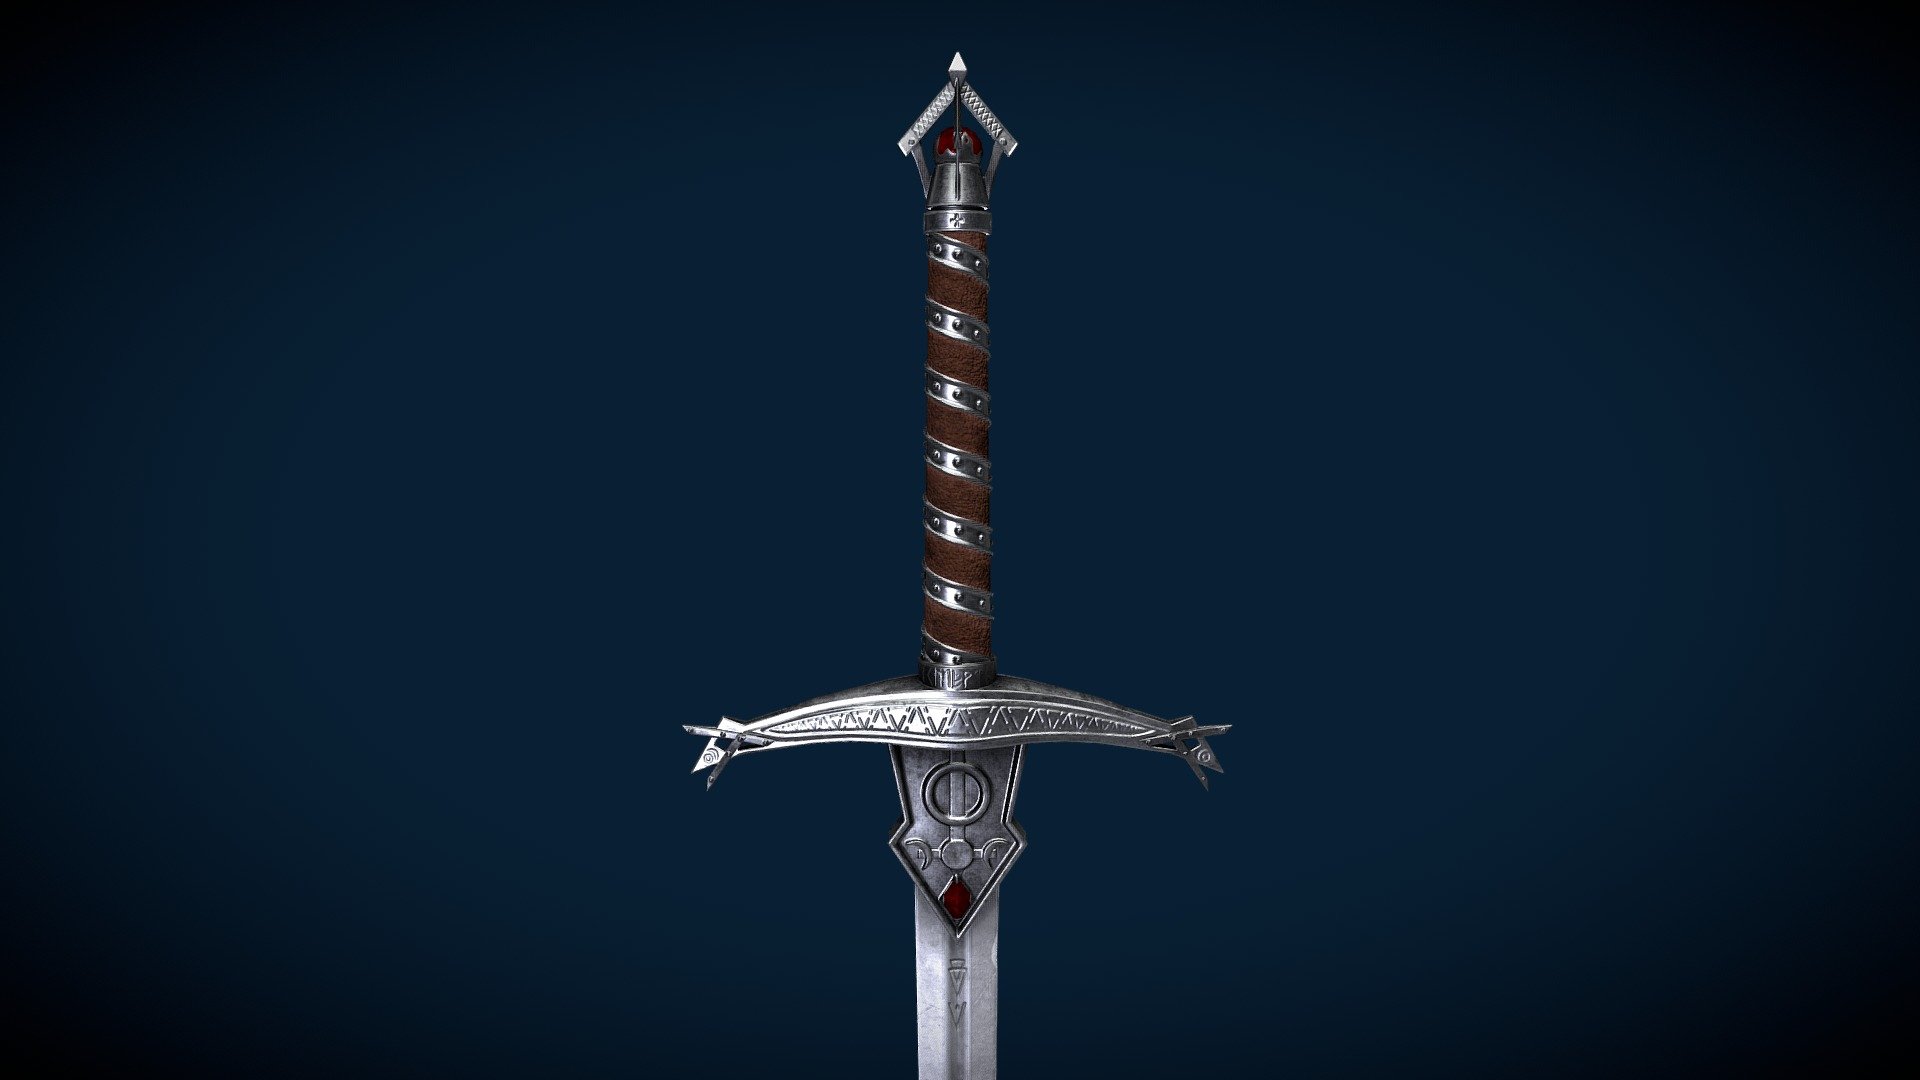 First game ready model of sword.
Please, welcome to my artctation!
https://www.artstation.com/artwork/8w8Eon - Medival Sword - 3D model by AlenSy 3d model